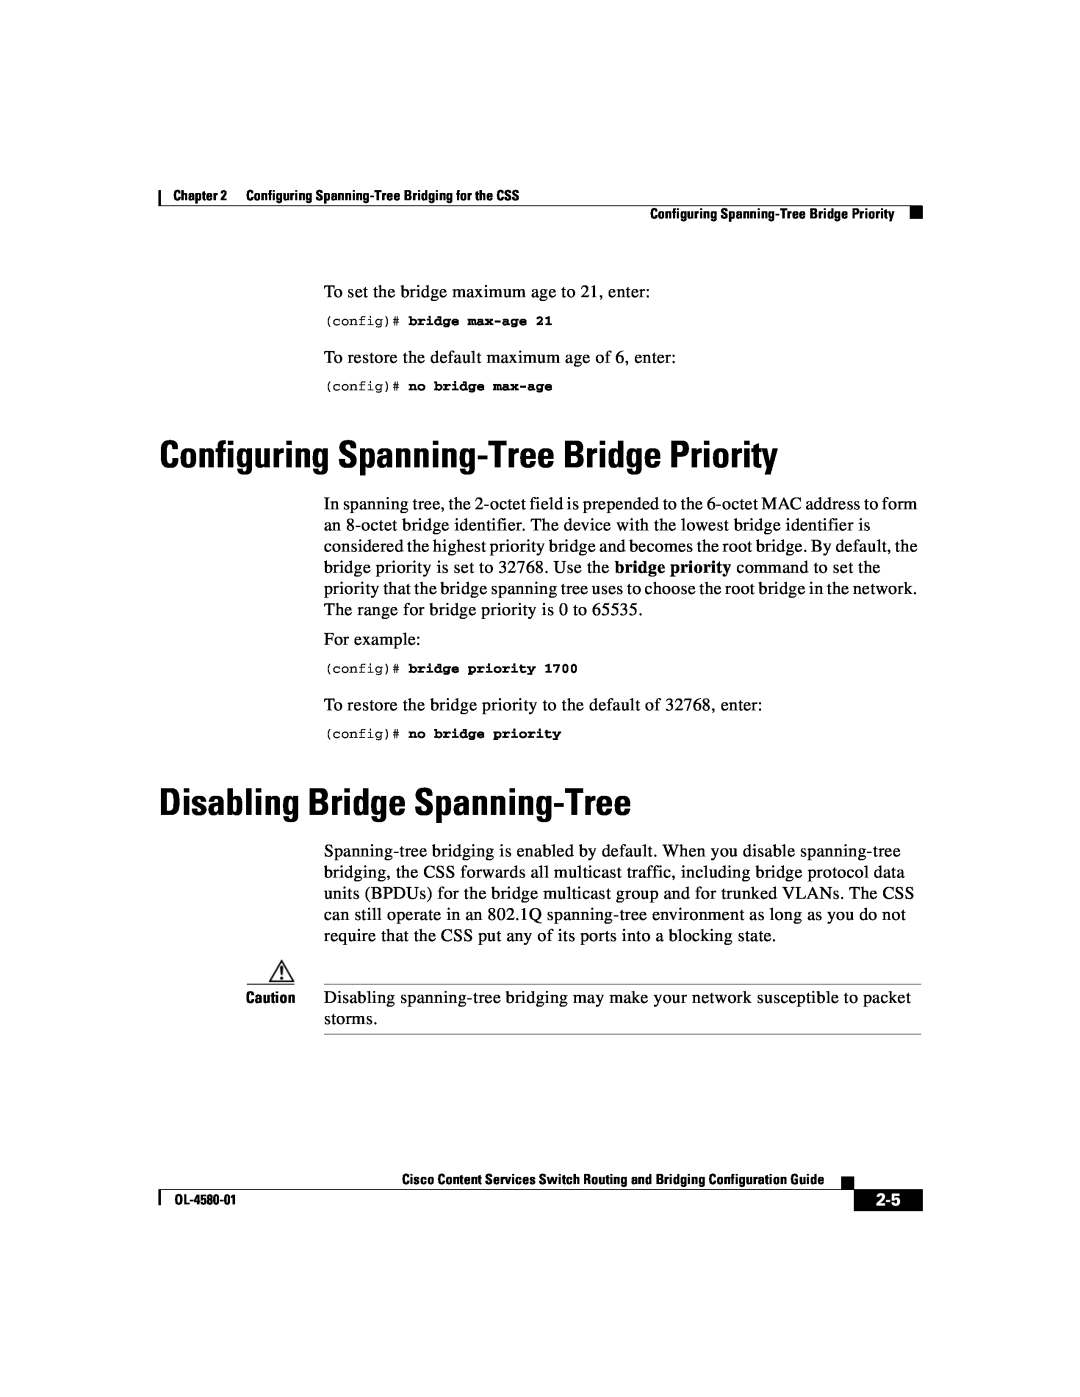 Cisco Systems OL-4580-01 manual Configuring Spanning-Tree Bridge Priority, Disabling Bridge Spanning-Tree 